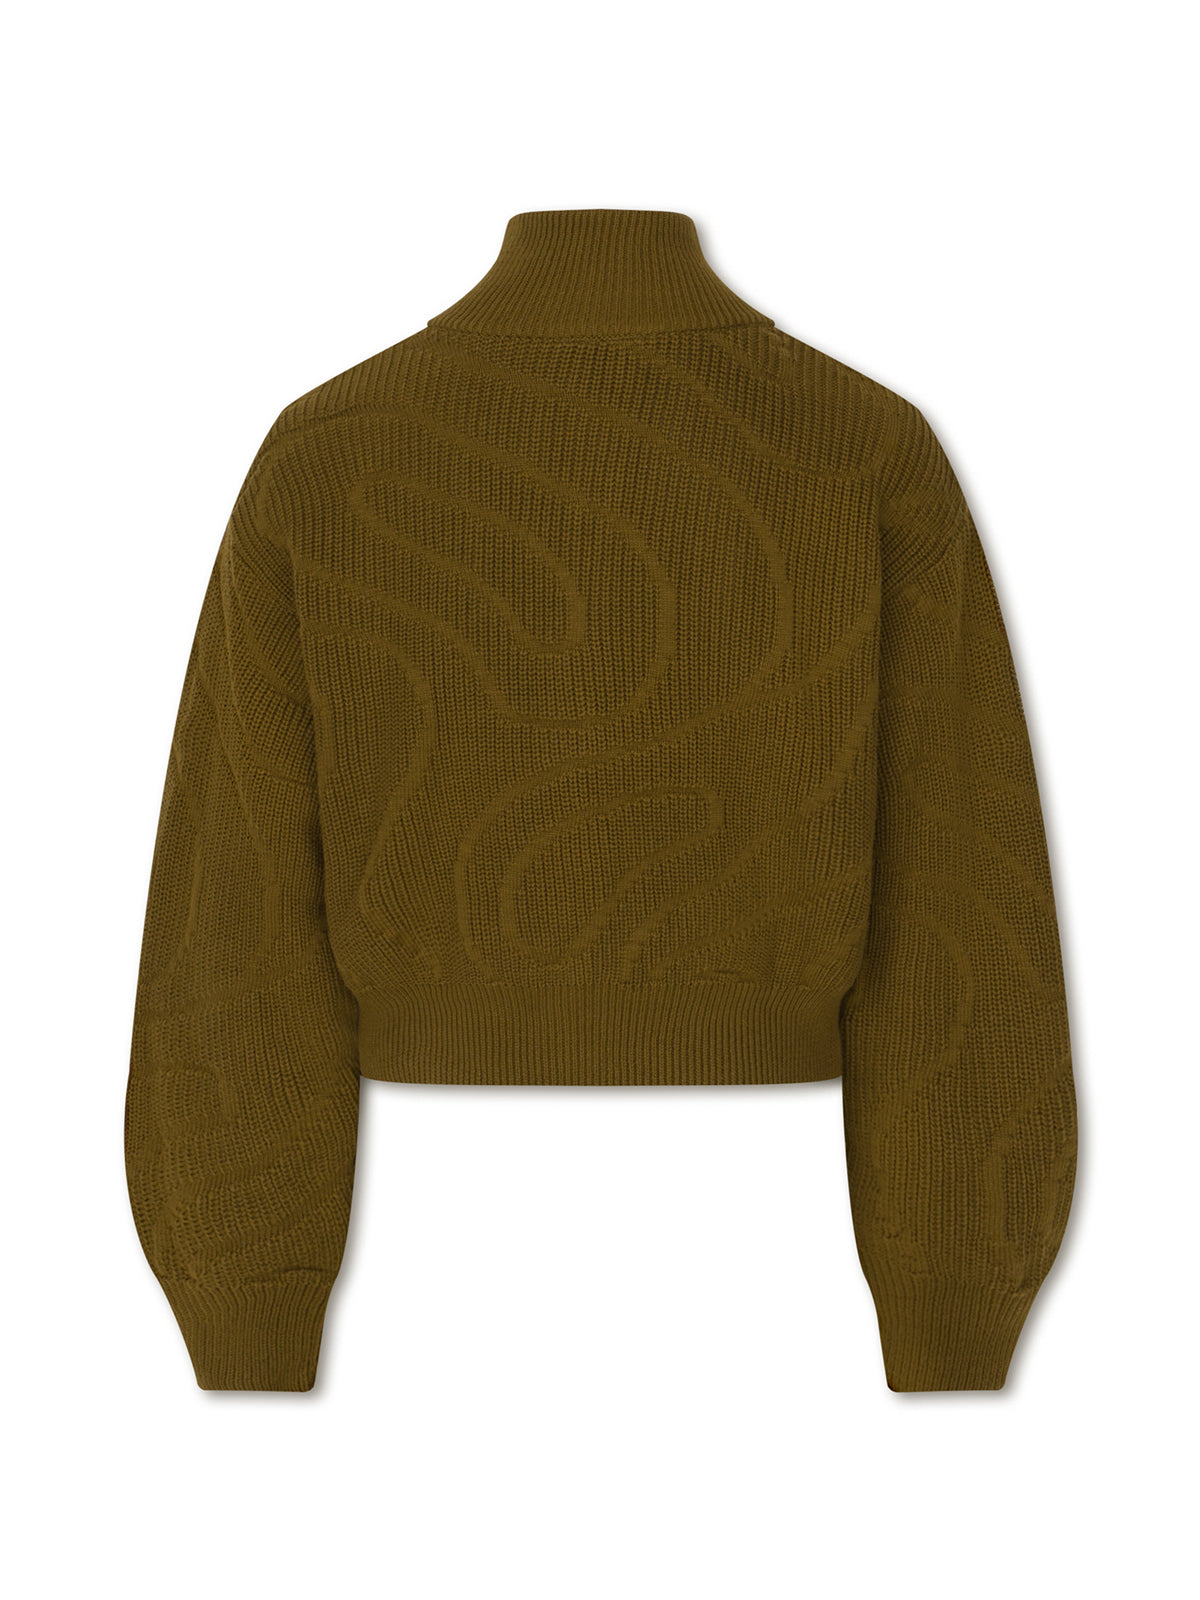 RIPPLE knit sweater - tobacco